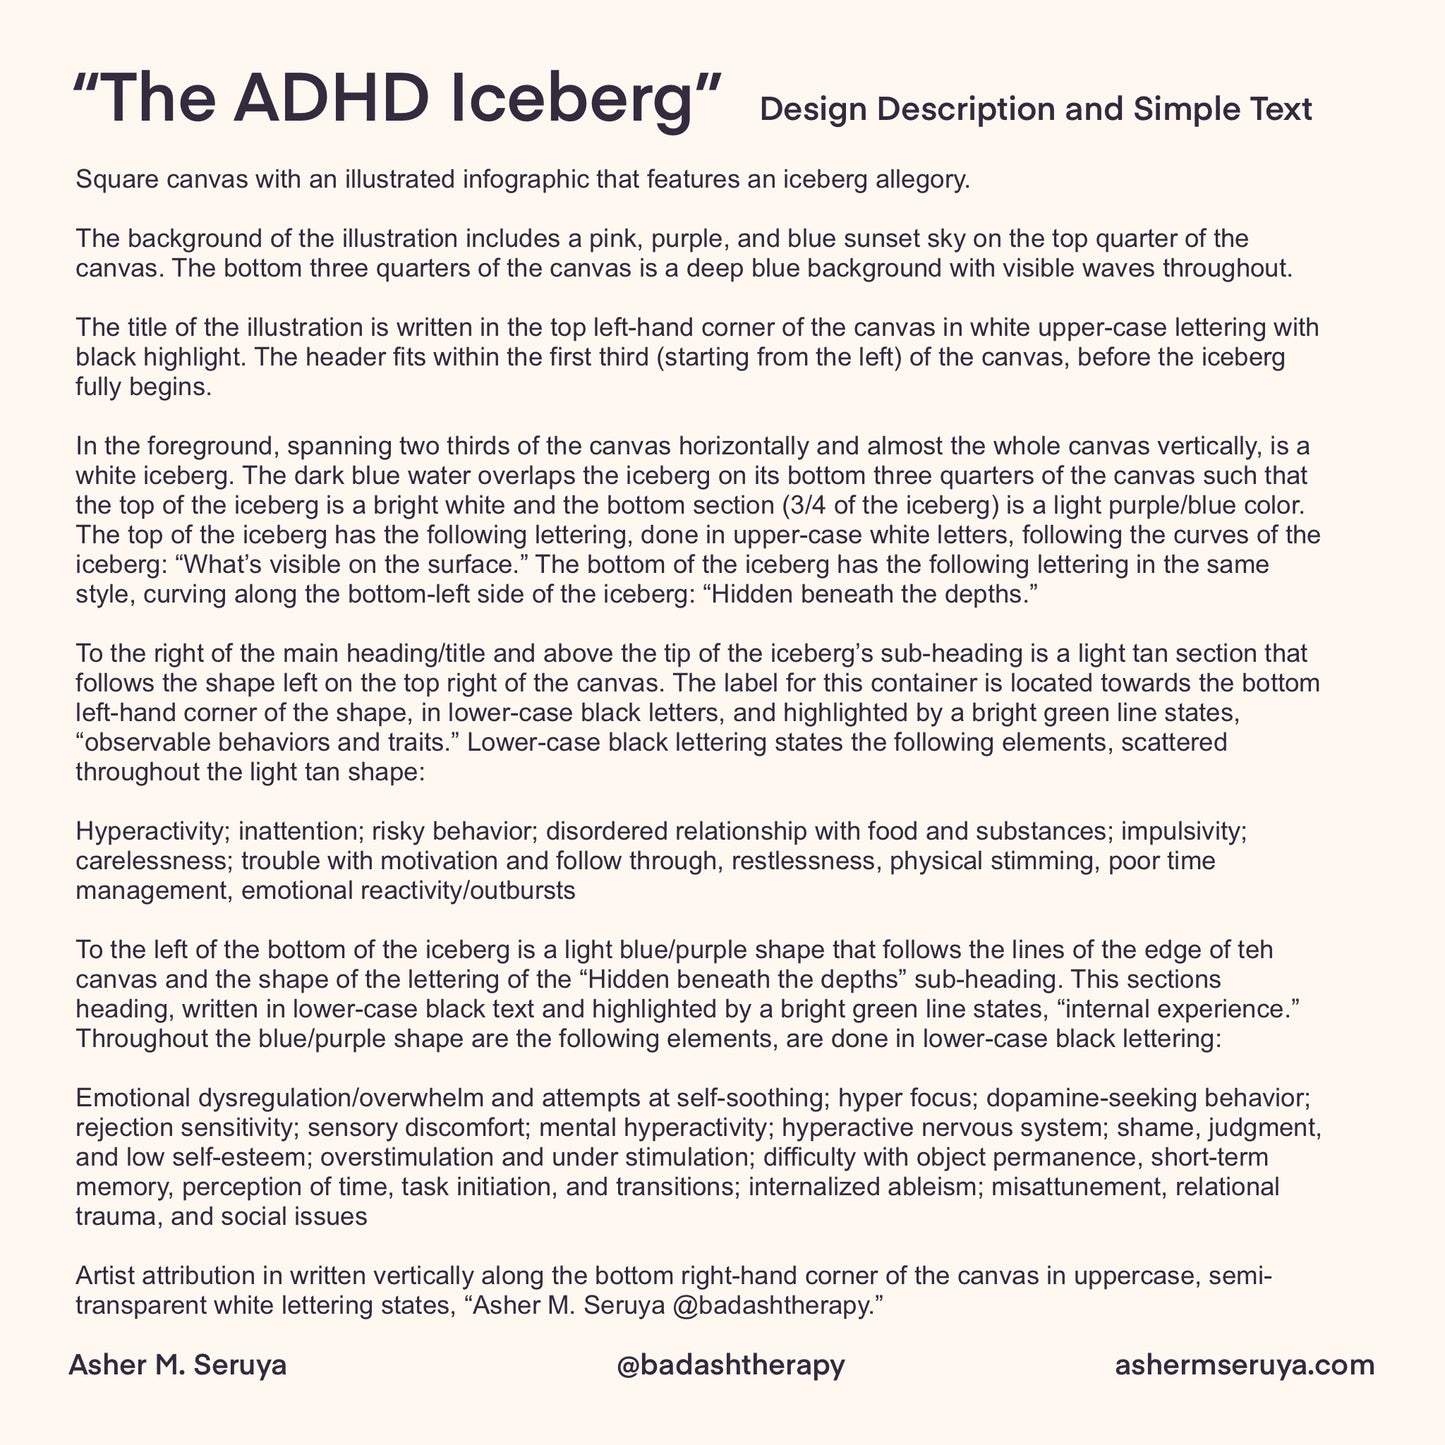 The ADHD Iceberg Digital Artwork - Illustrated Infographic